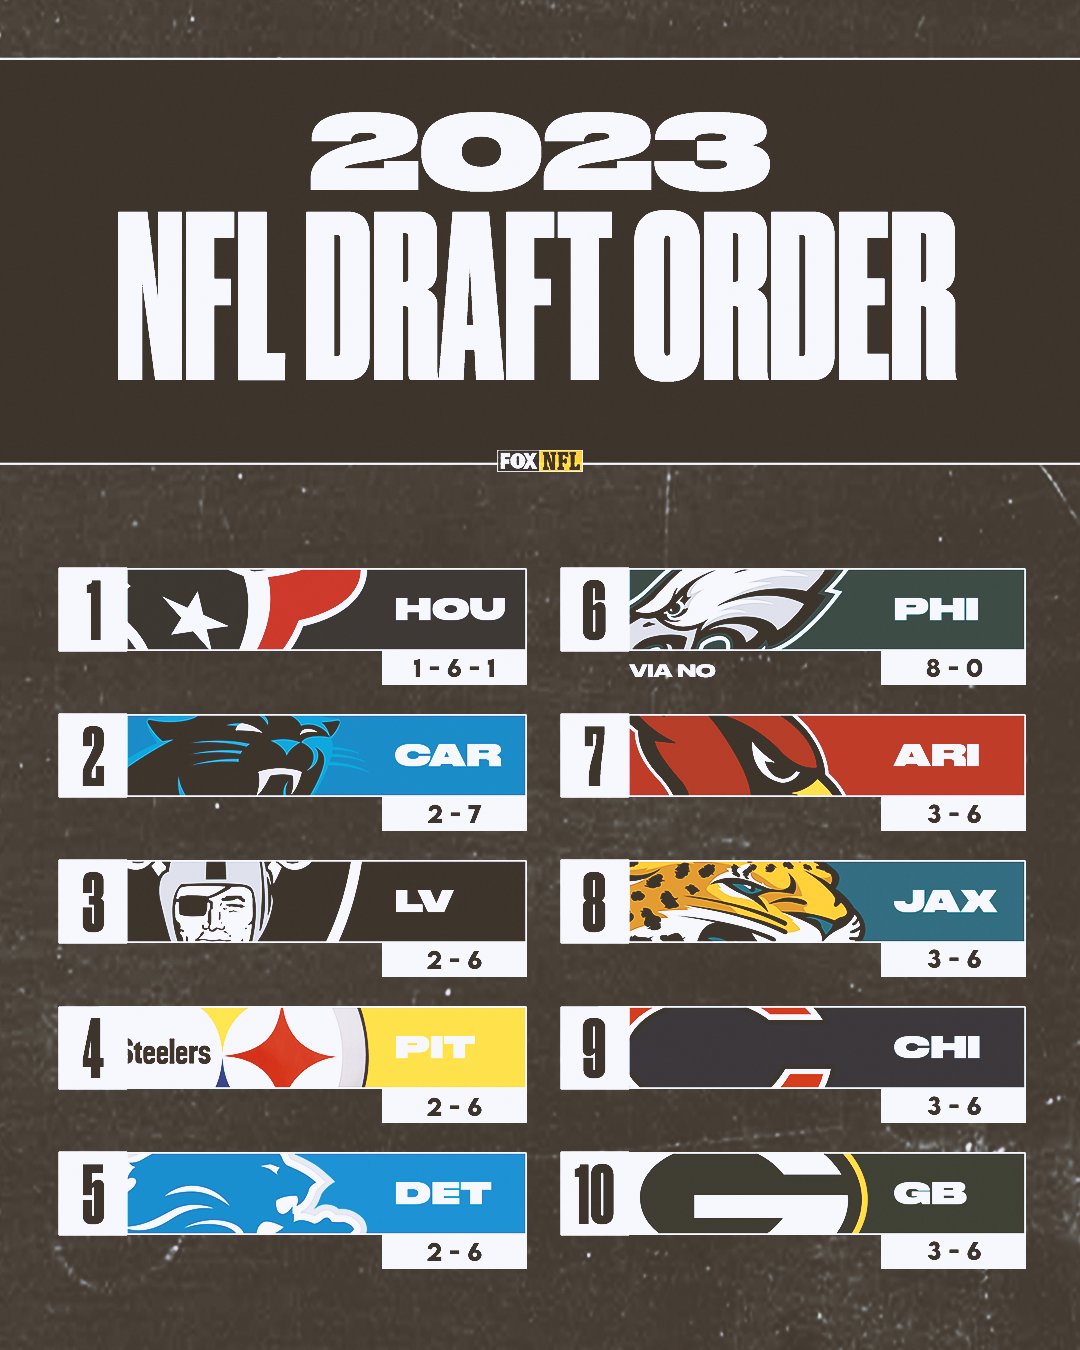 nfl draft 2022 top 10 picks